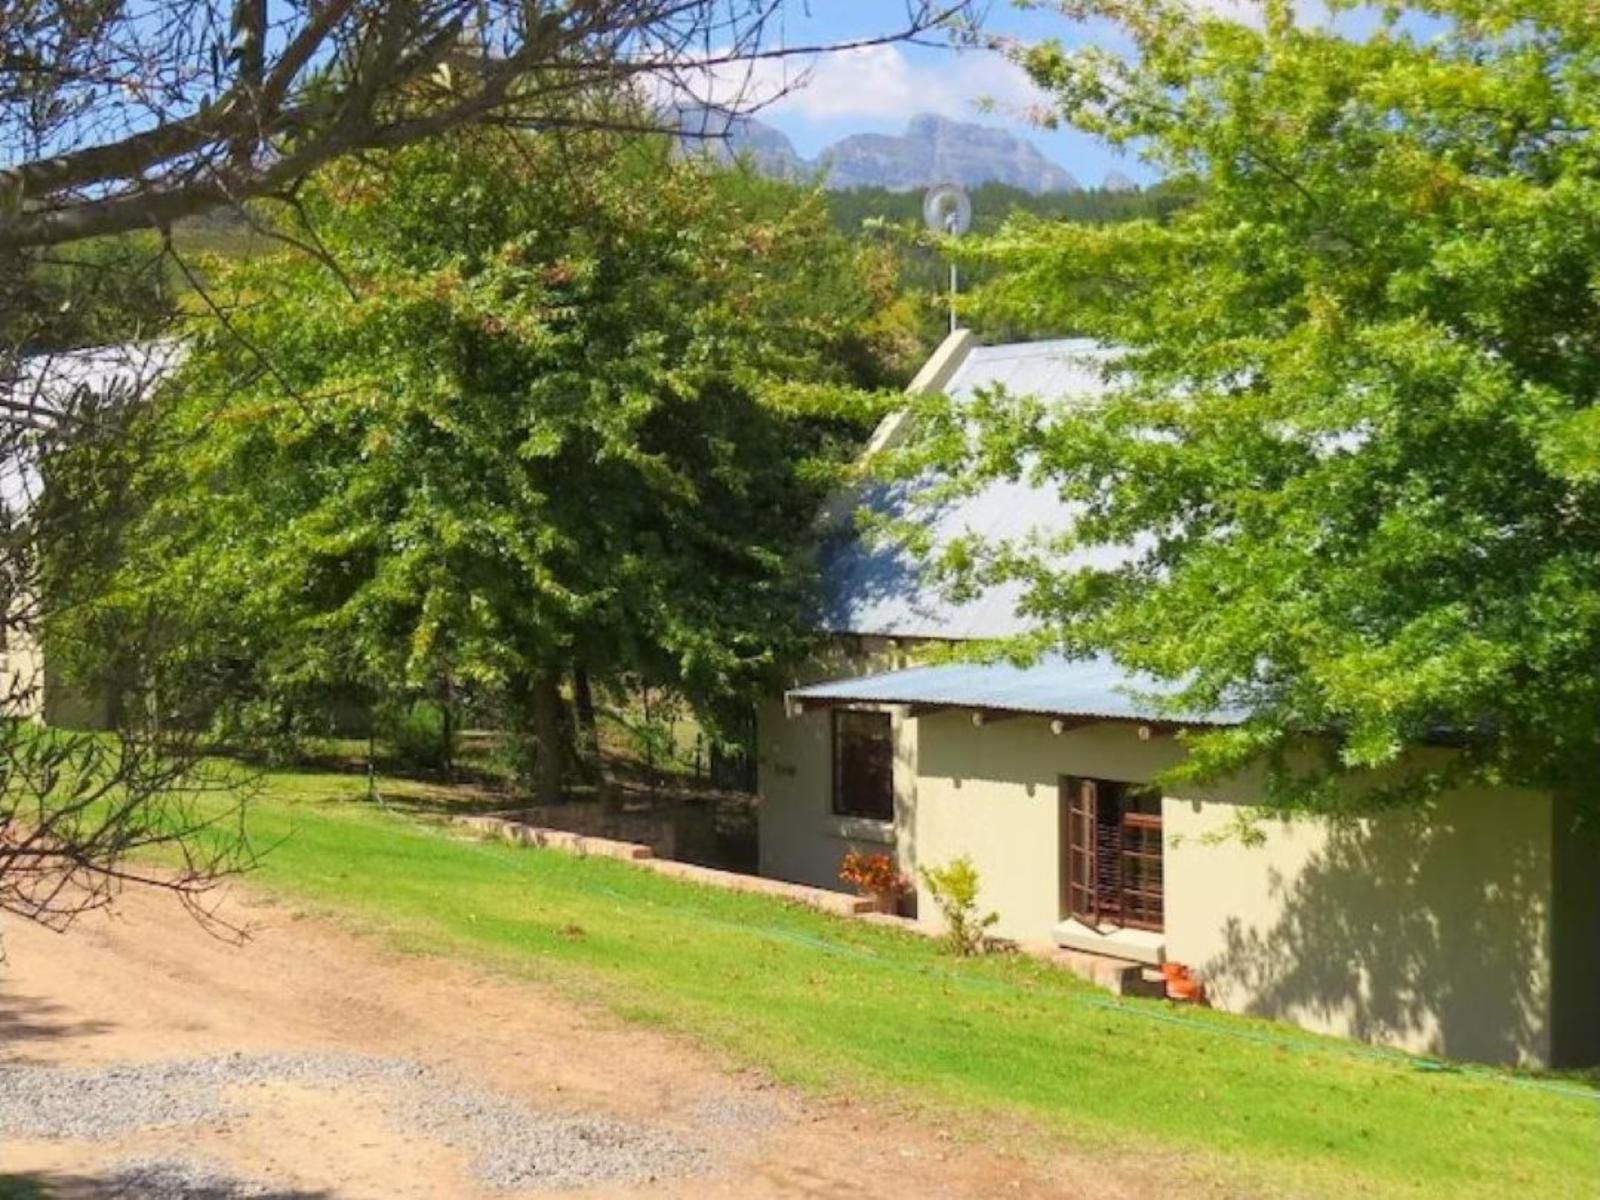 Zebra Cottage Stellenbosch Western Cape South Africa House, Building, Architecture, Mountain, Nature